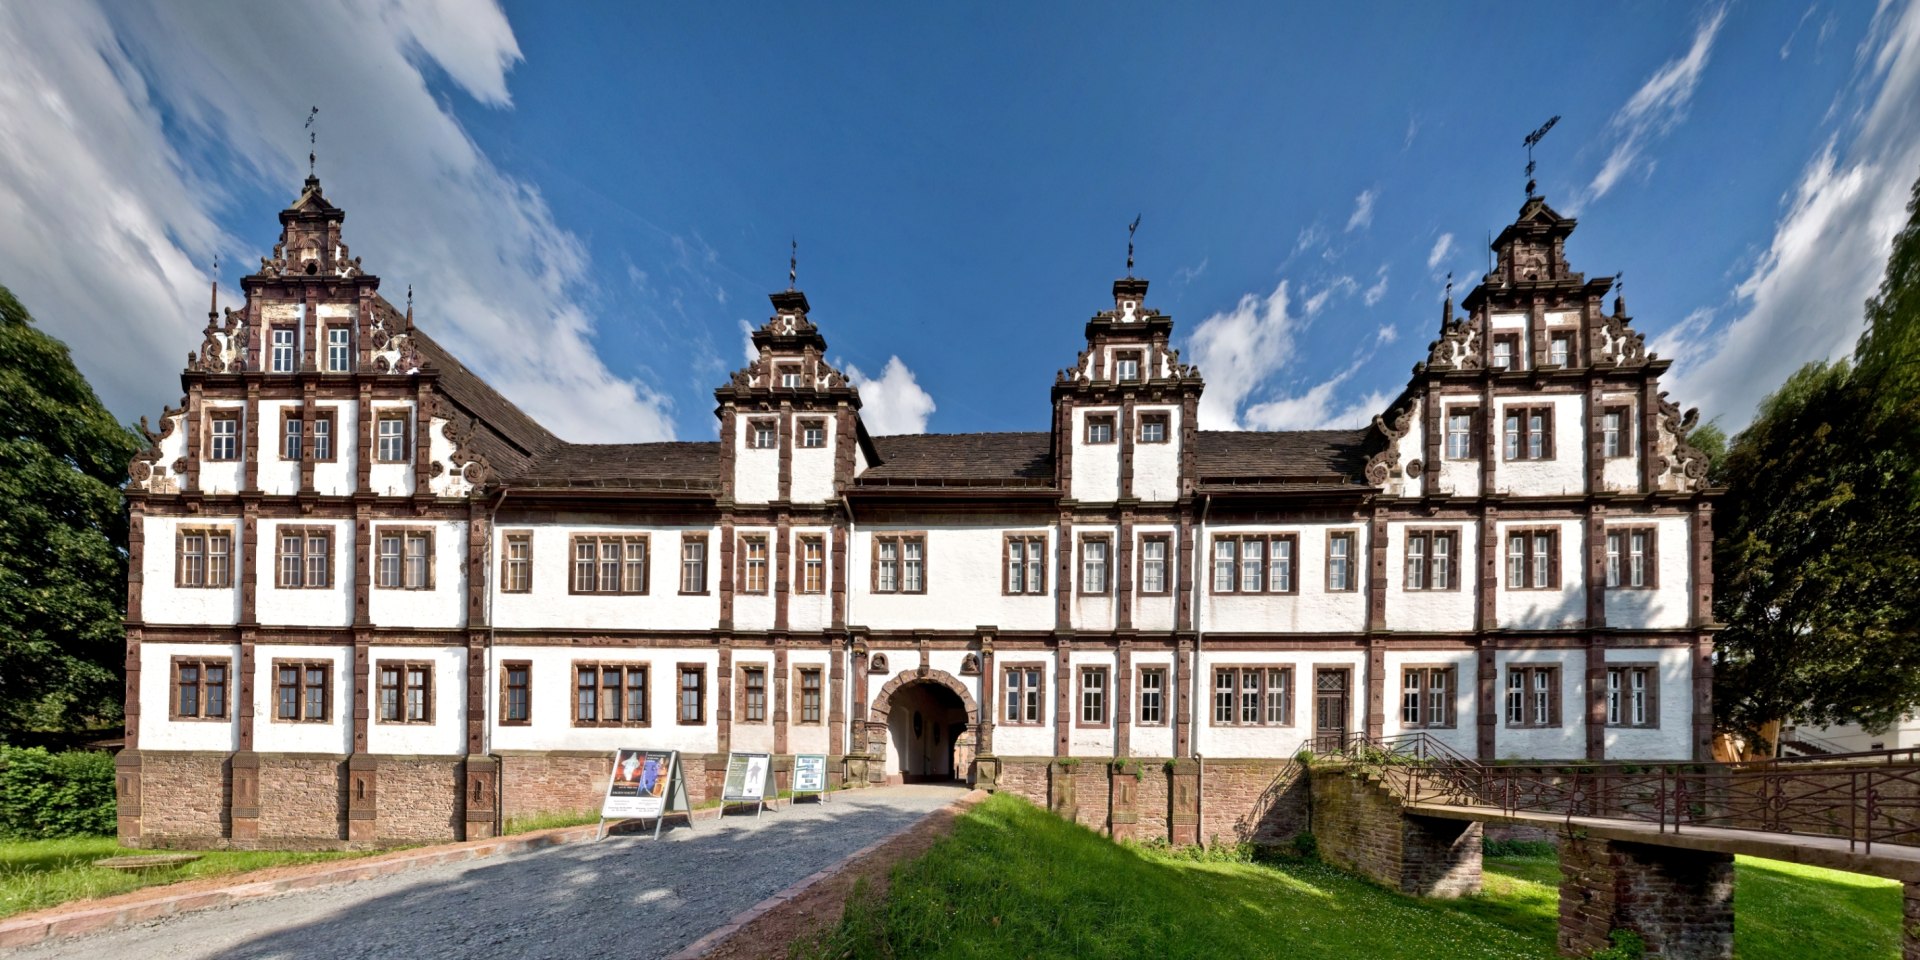 Weserrenaissance Schloss Bevern, © Touristinformation Bevern